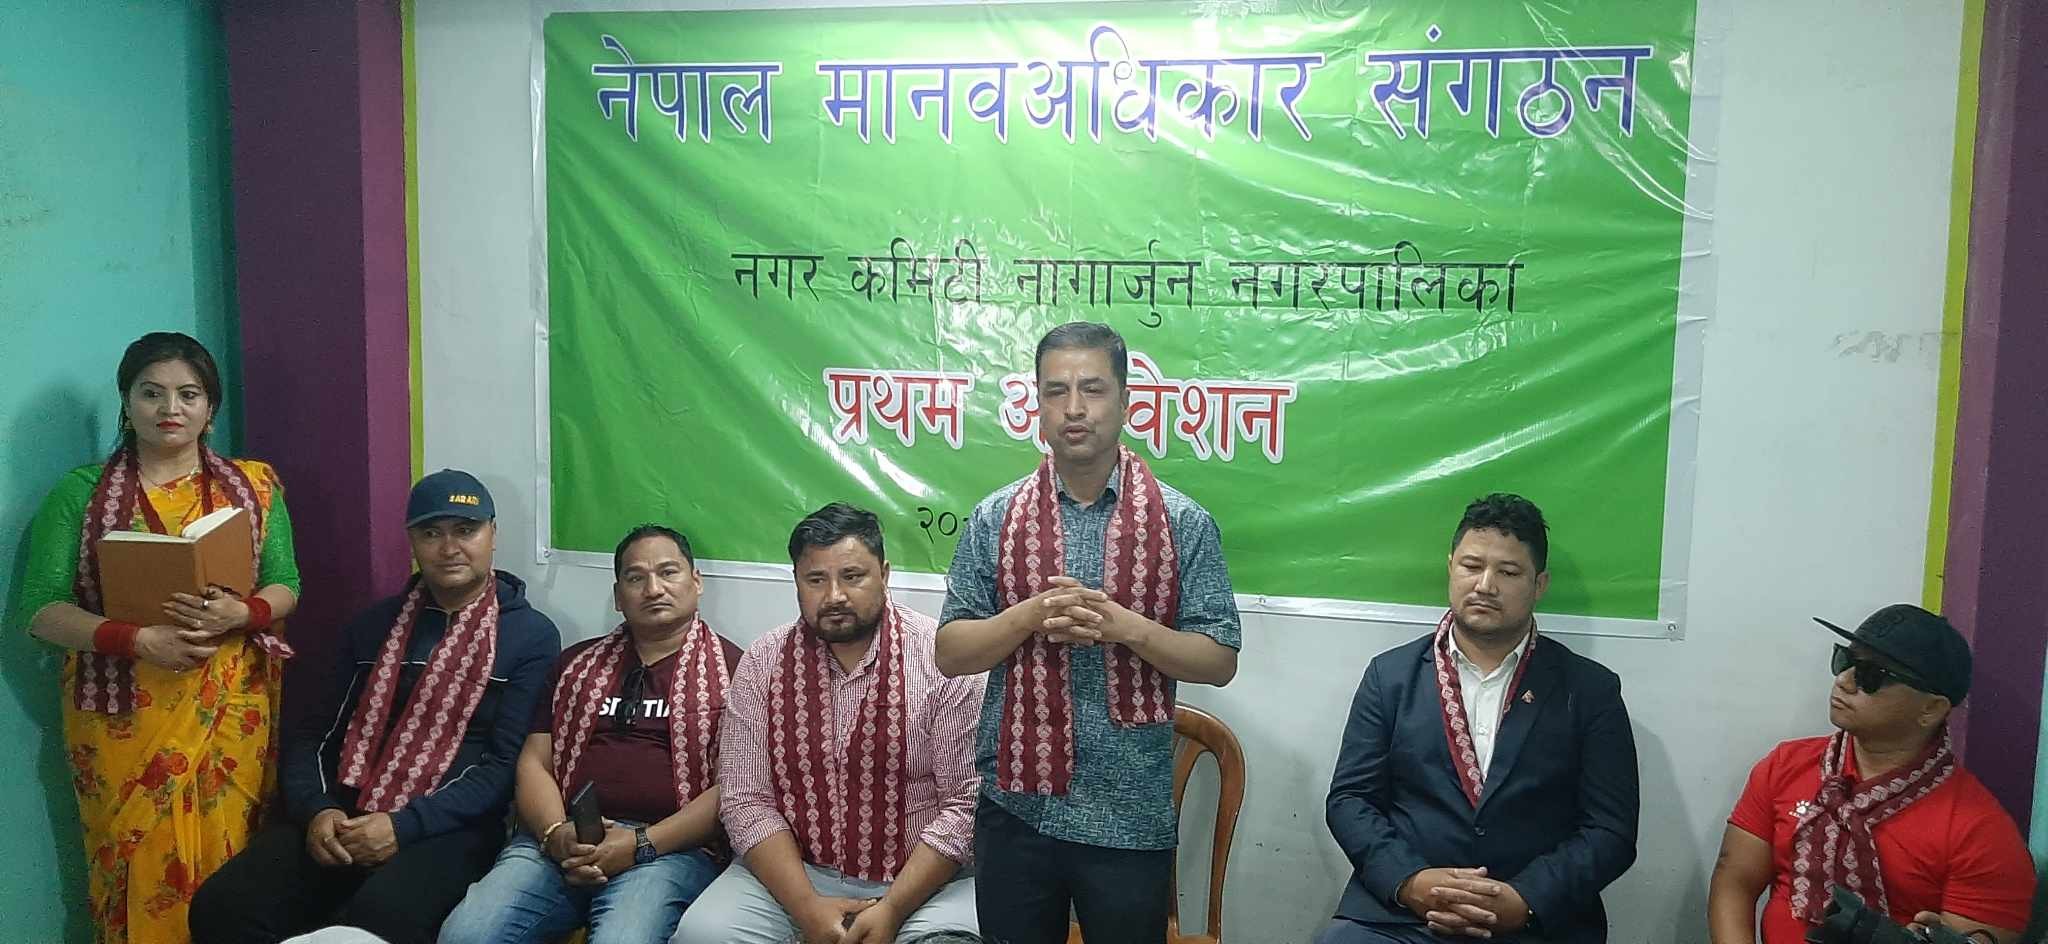 नेपाल मानव अधिकार संगठन नागार्जुन नगर कमिटीको प्रथम अधिवेसन सम्पन्न